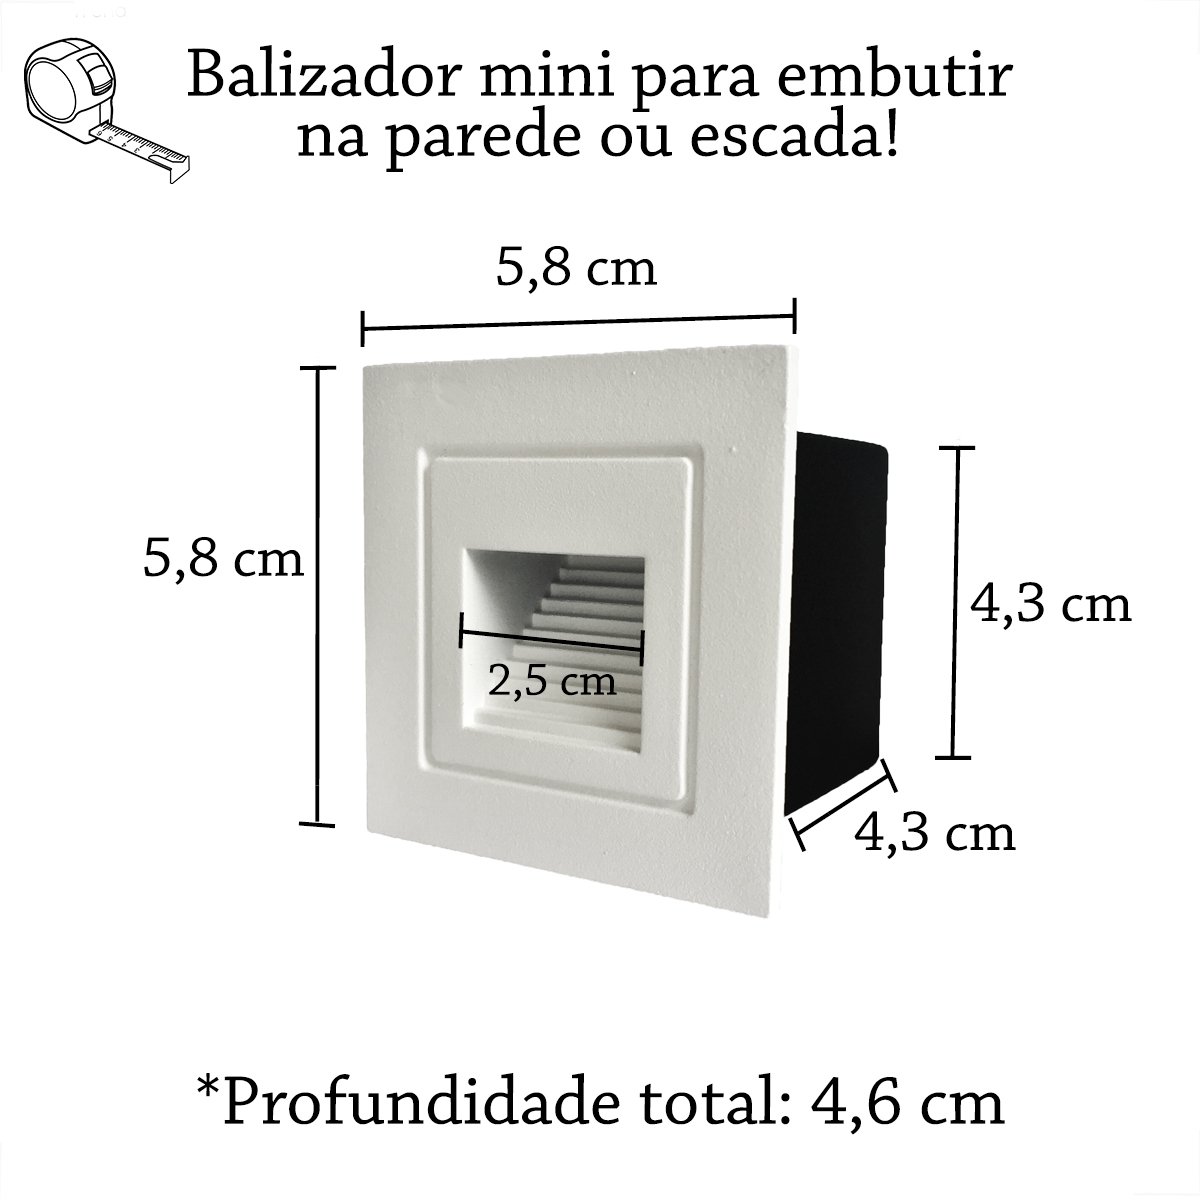 4 Balizador Branco Para Embutir Parede Mini Muro Lup75 - 6